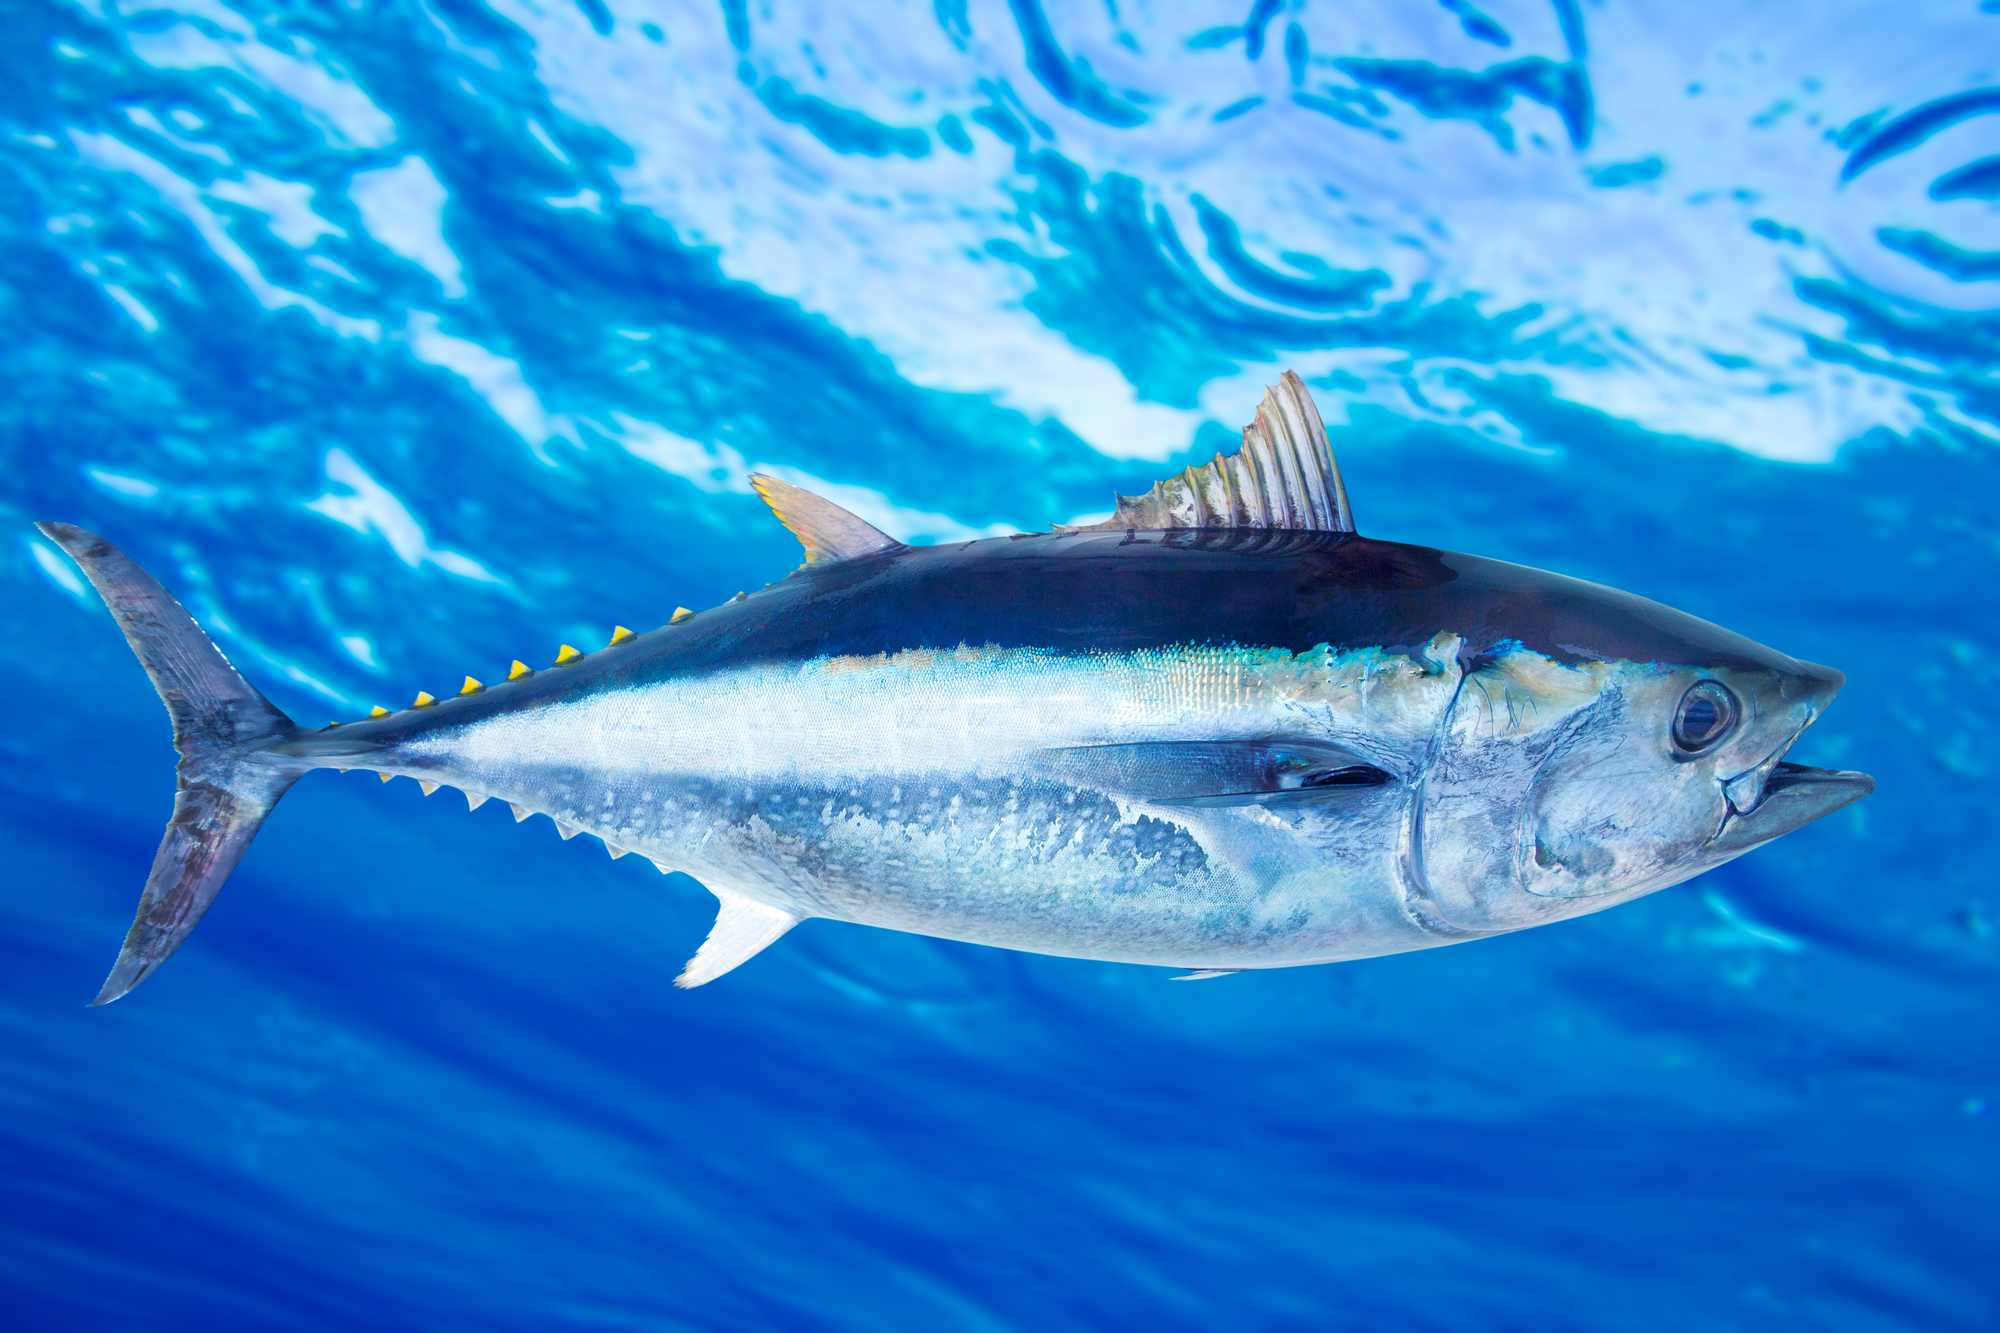 Tonno rosso Thunnus thynnus pesce d'acqua salata sott'acqua mare blu